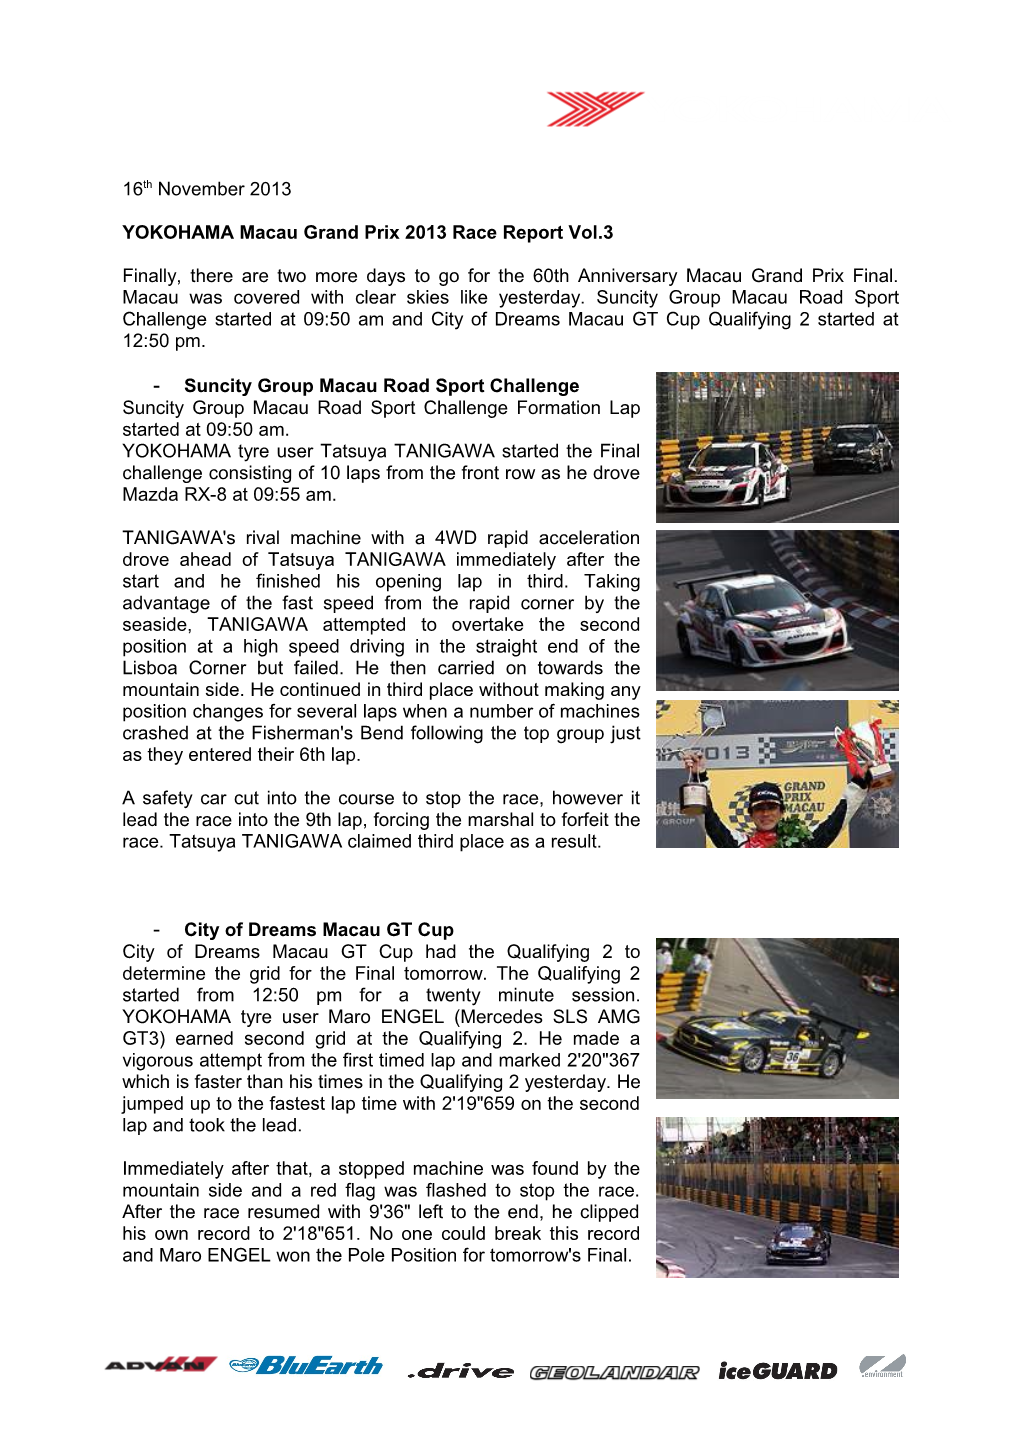 YOKOHAMA Macau Grand Prix 2013 Race Report Vol.3